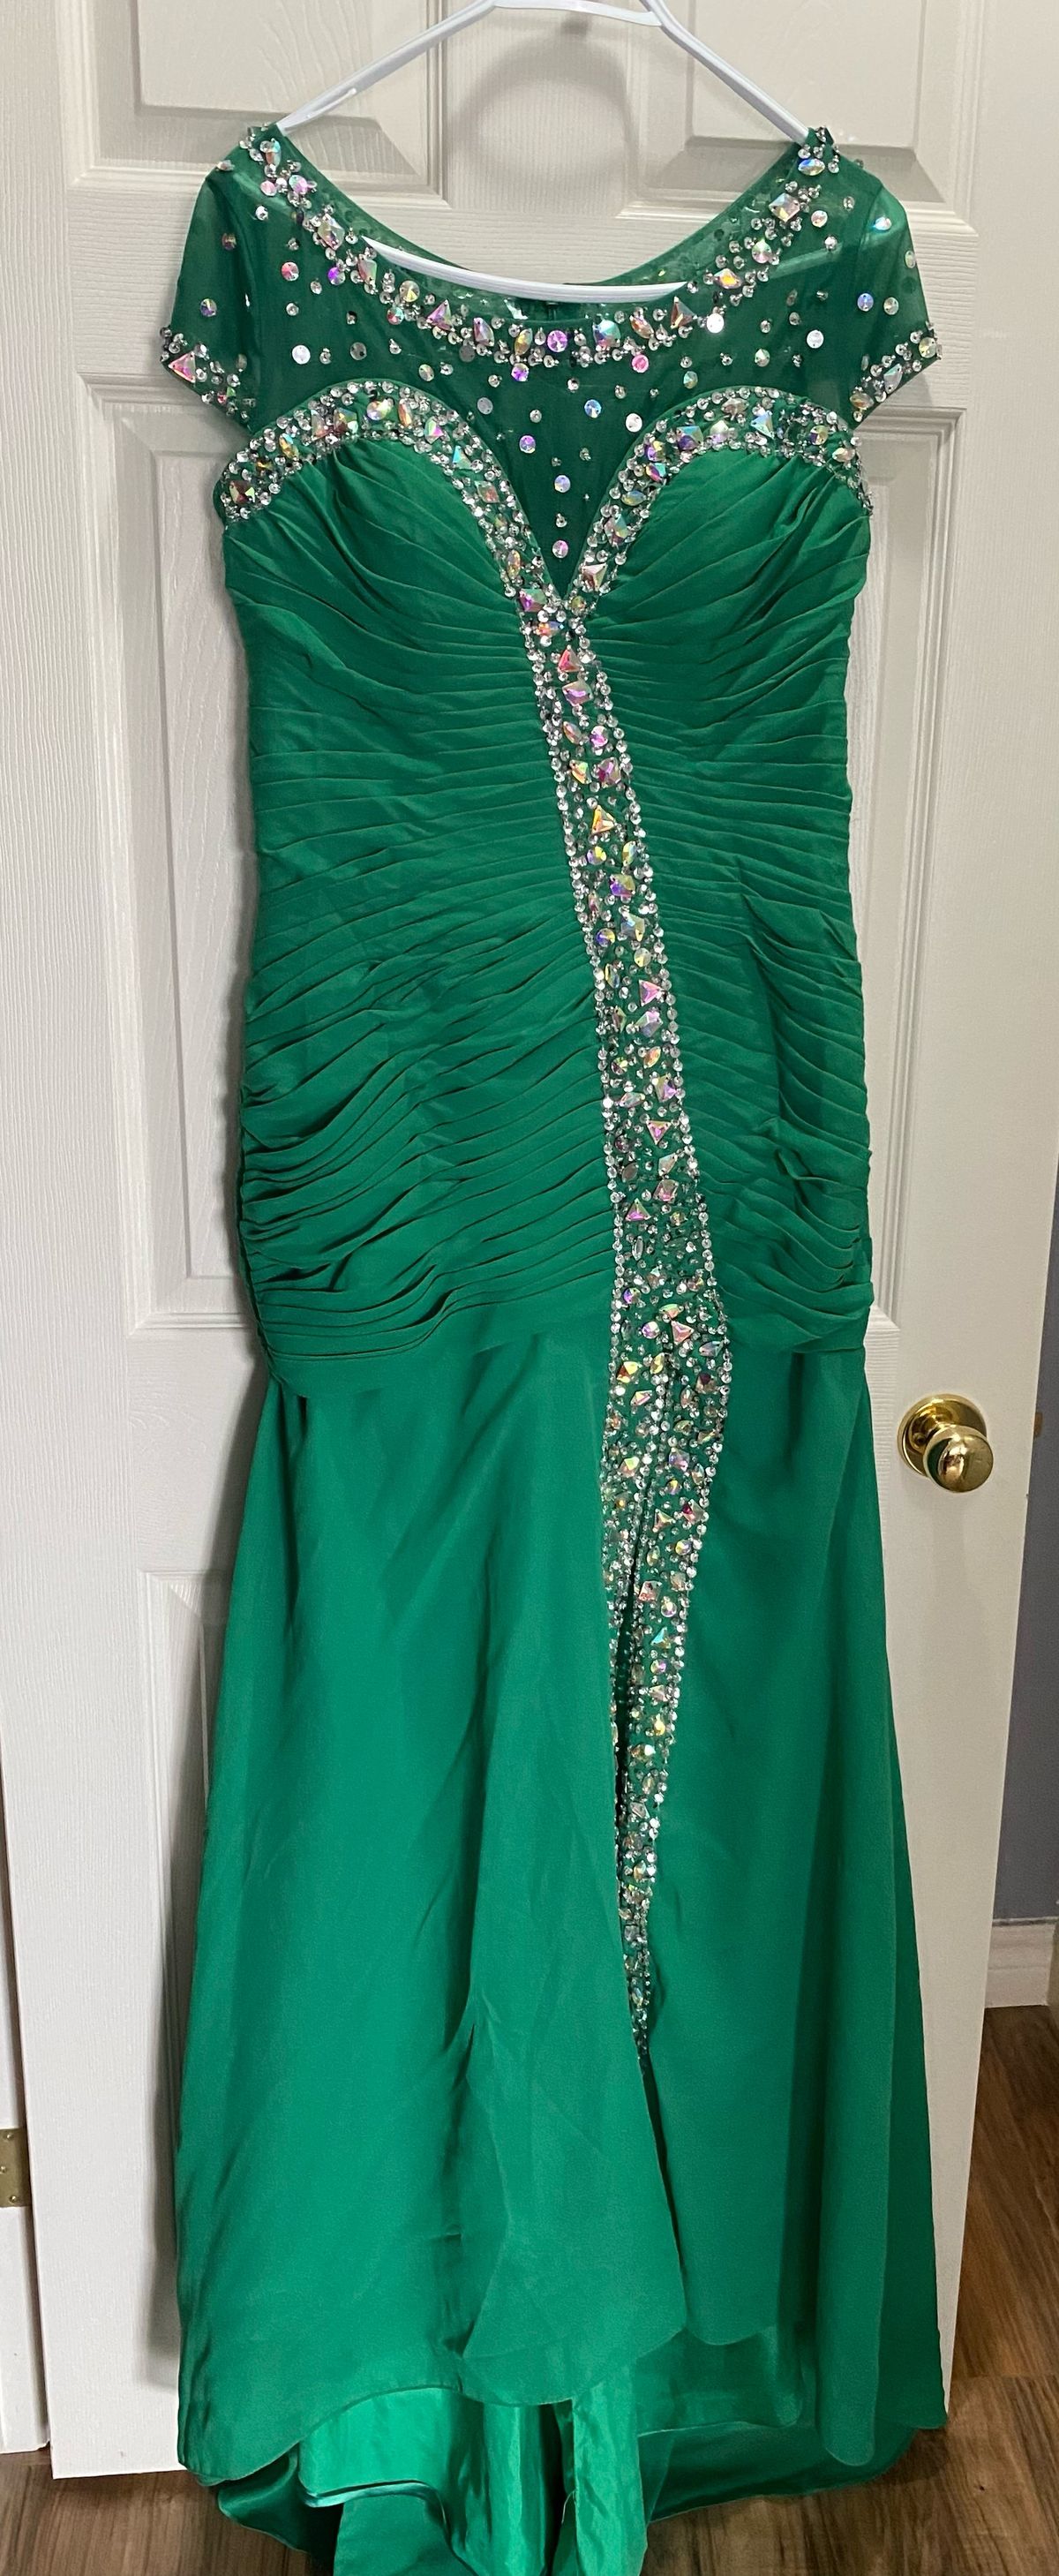 Size 8 Cap Sleeve Green Mermaid Dress on Queenly